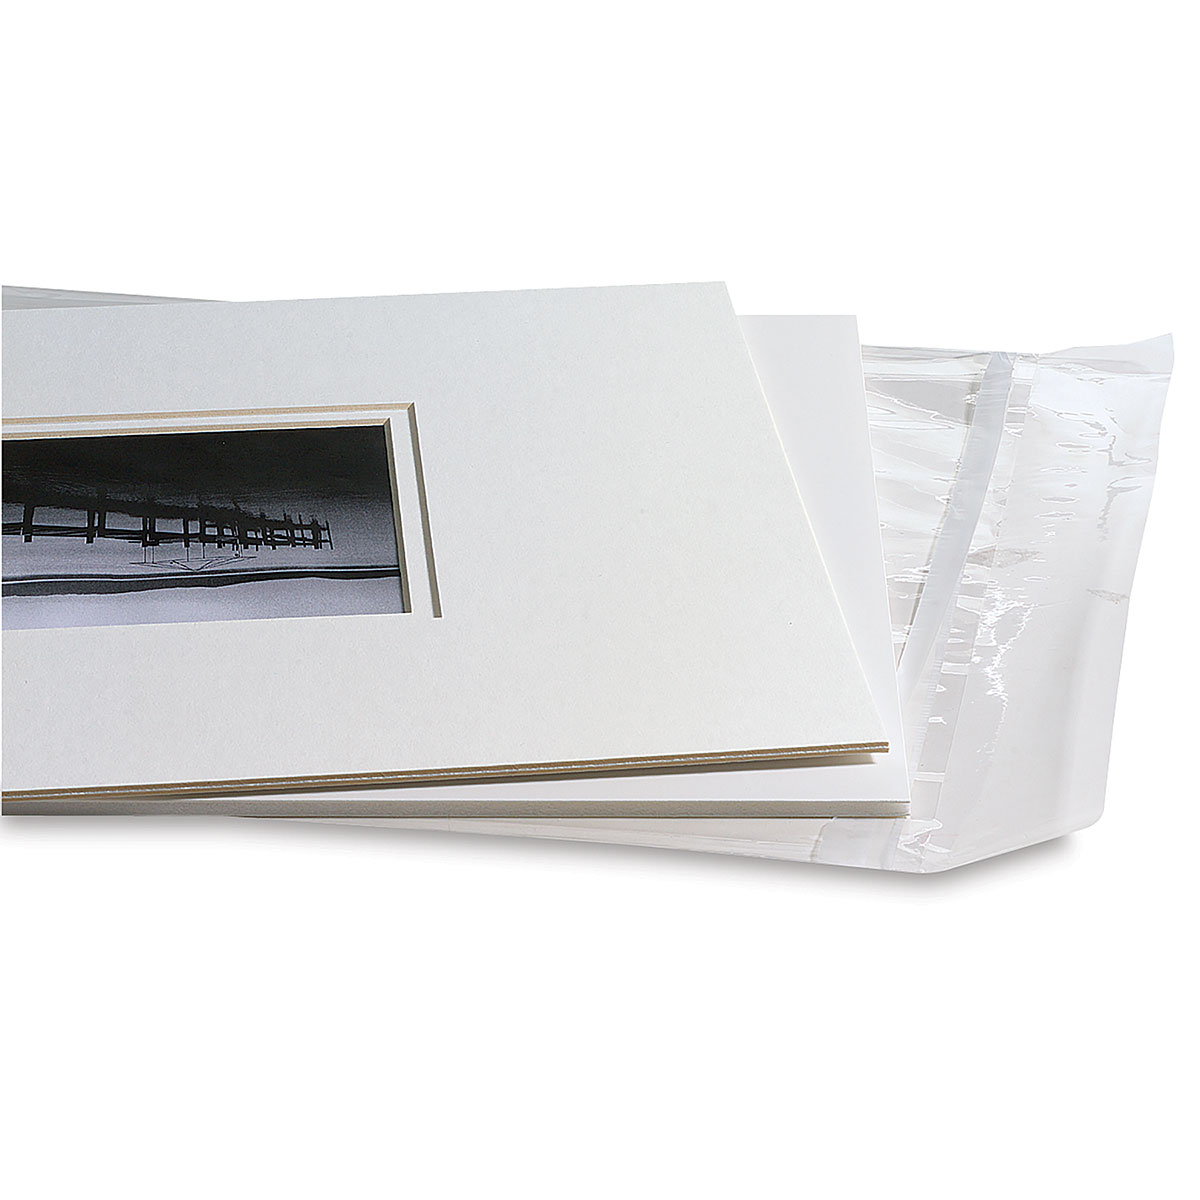 Buy Glassine Interleaving Paper, 9x12, Acid Free Photo Paper Barrier